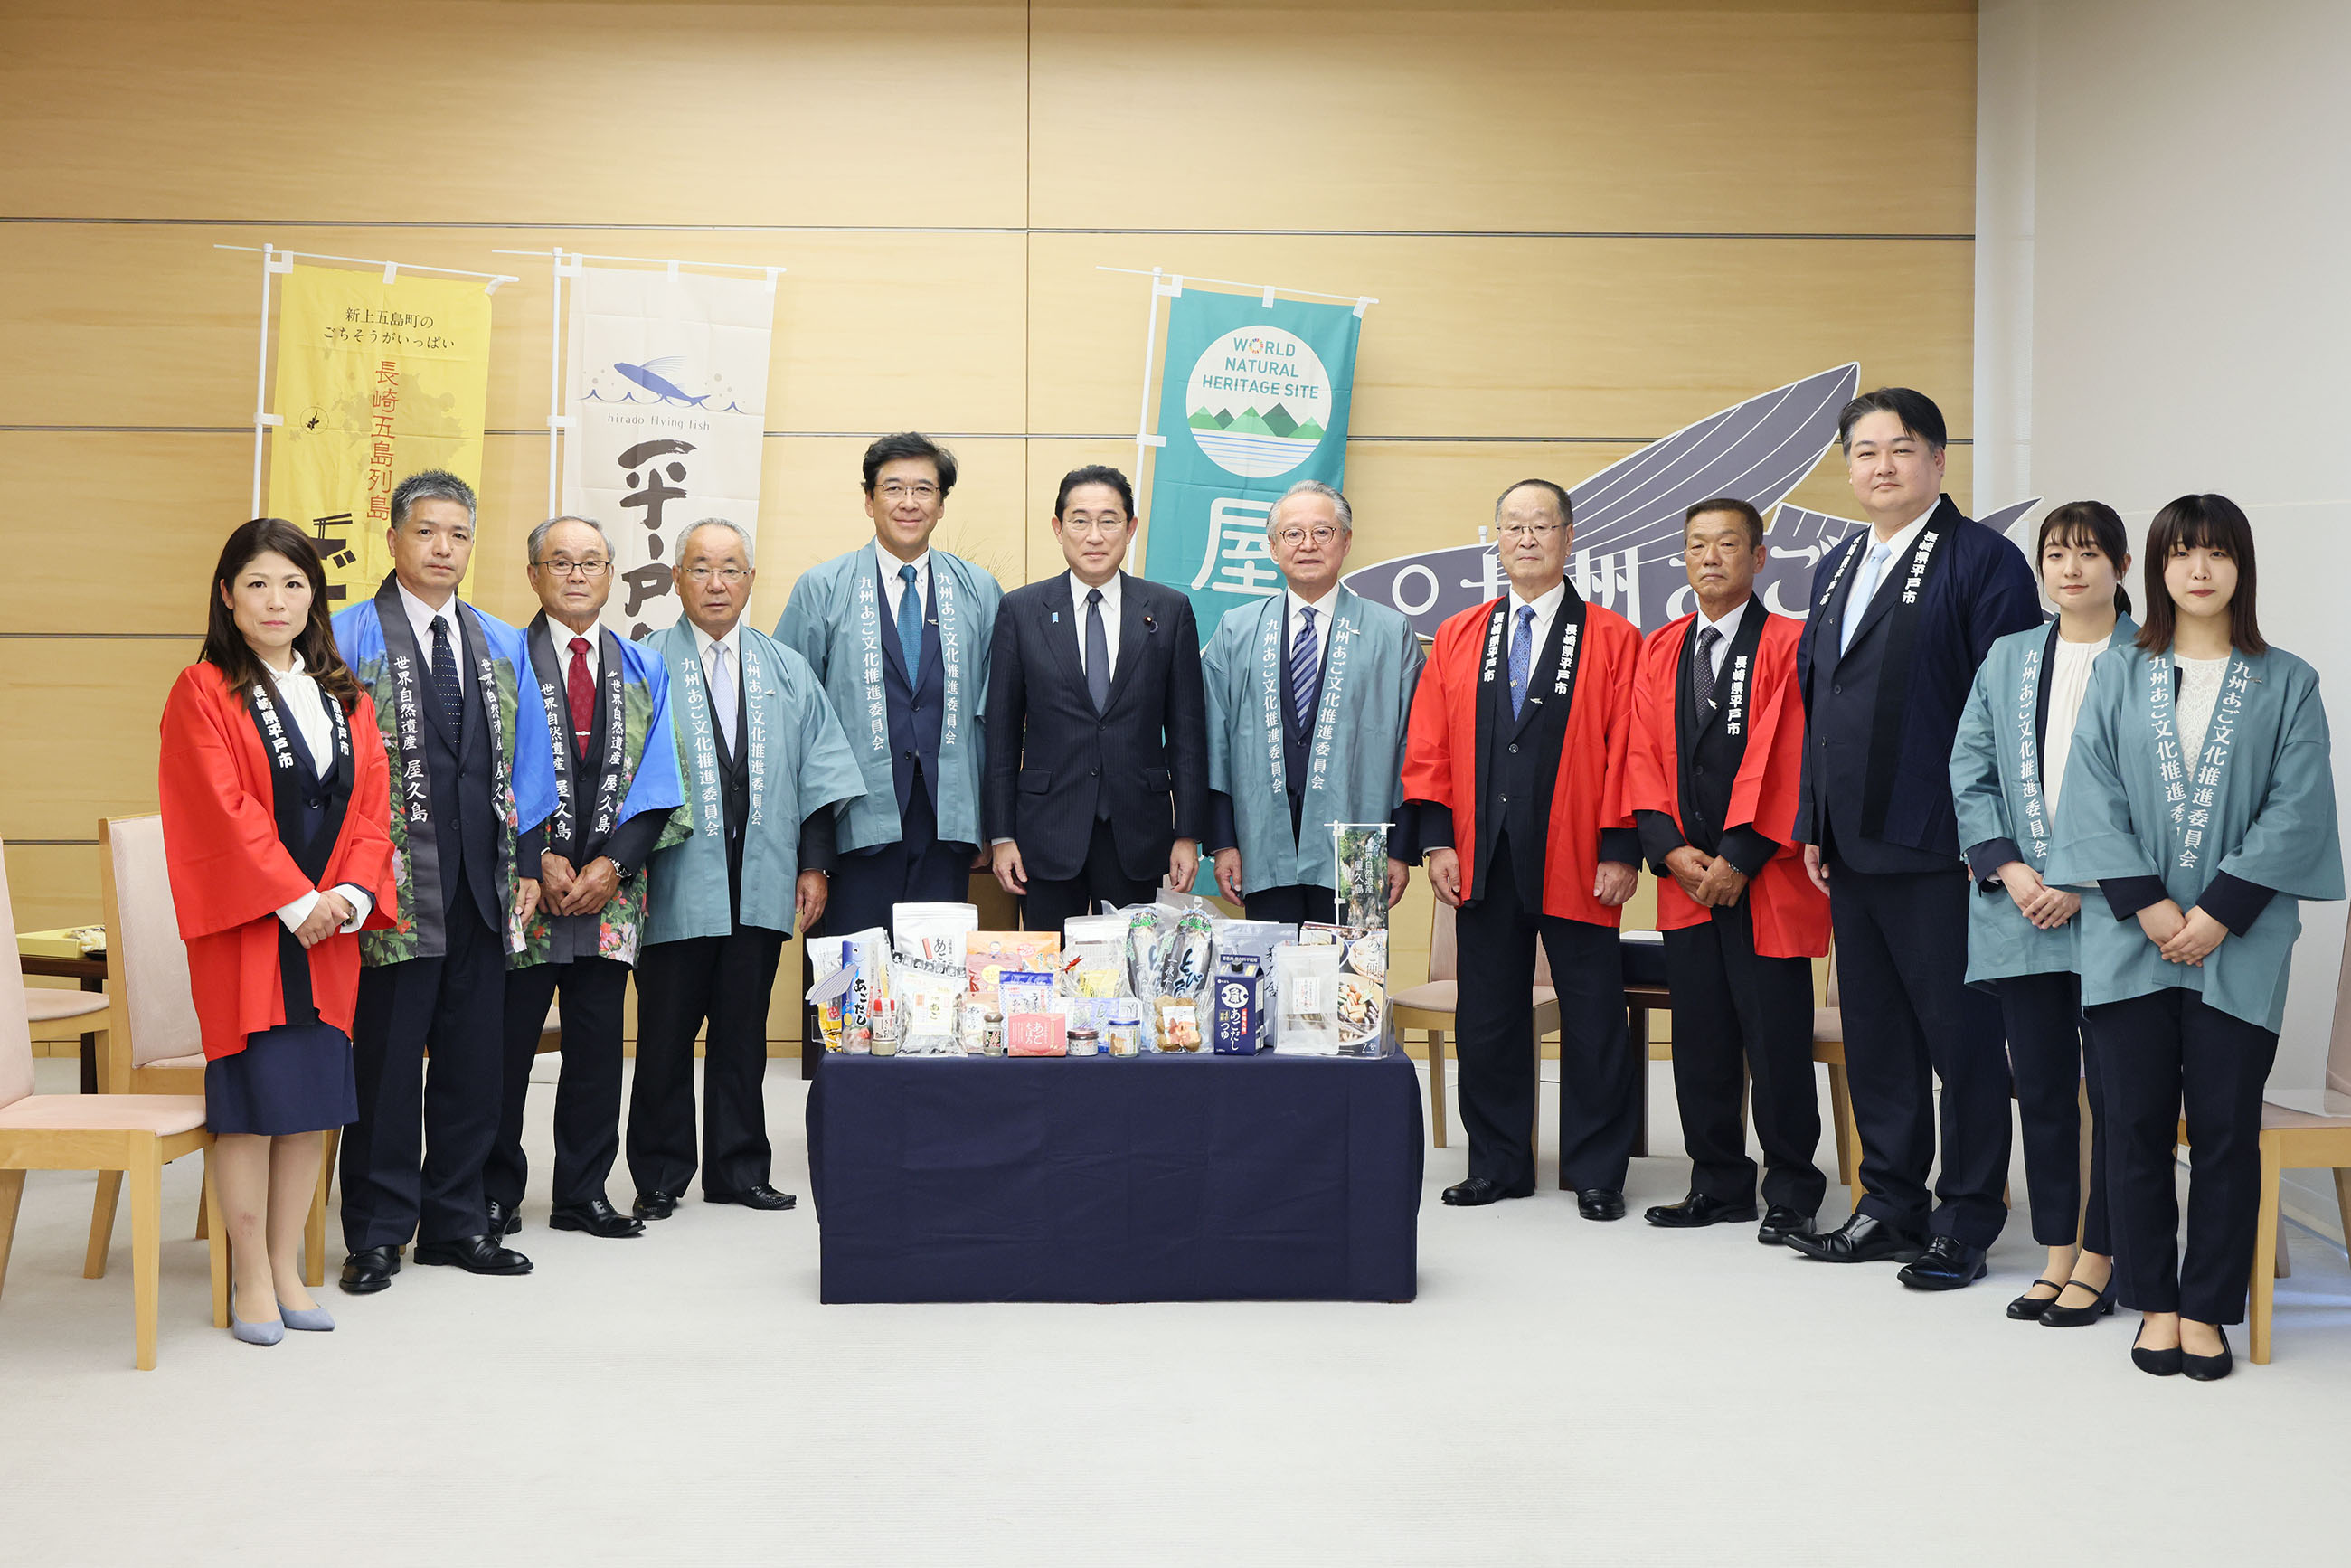 Presentation of Ago (Flying fish) Products by Kyushu Ago Bunka Suishin Iinkai (Kyushu Flying Fish Culture Promotion Committee)